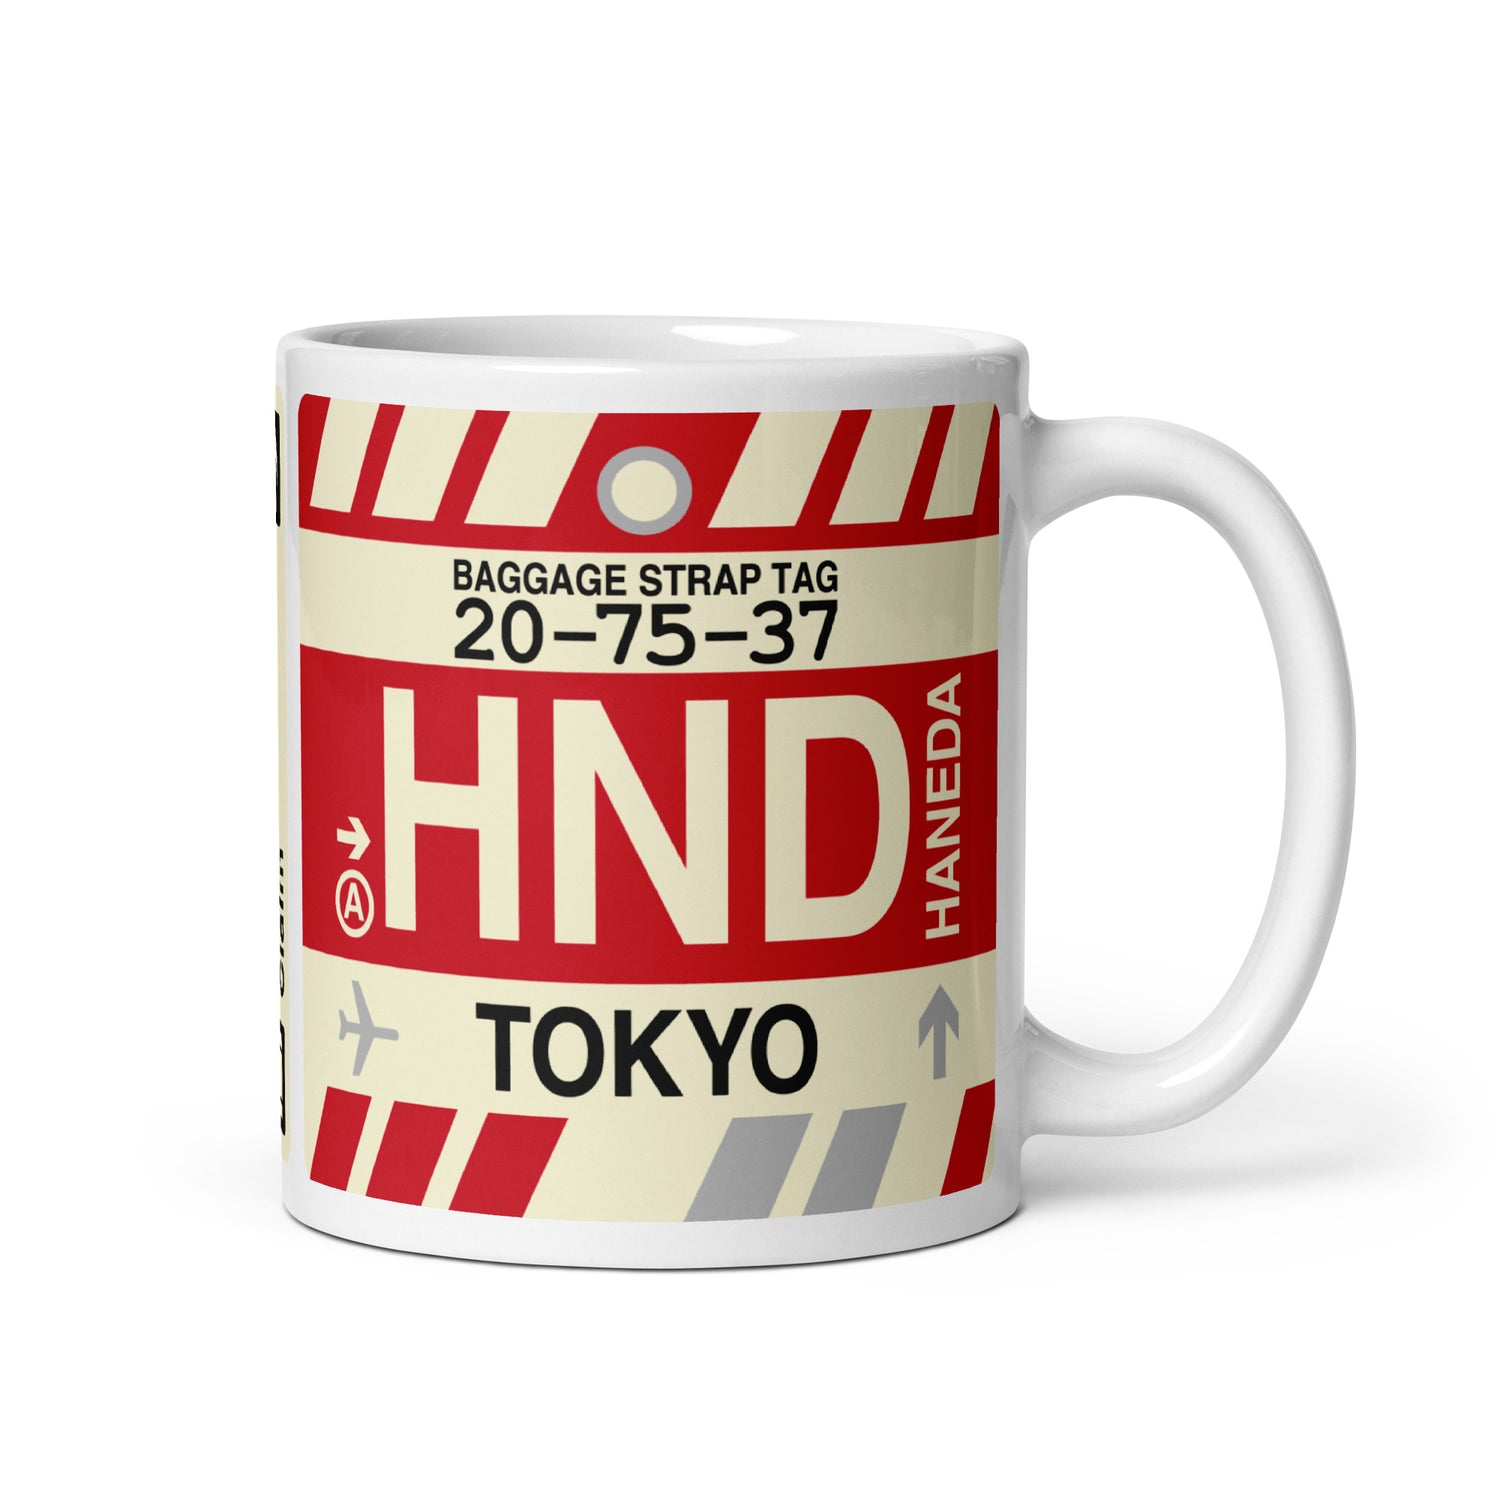 Tokyo Japan Coffee Mugs and Water Bottles • HND Airport Code